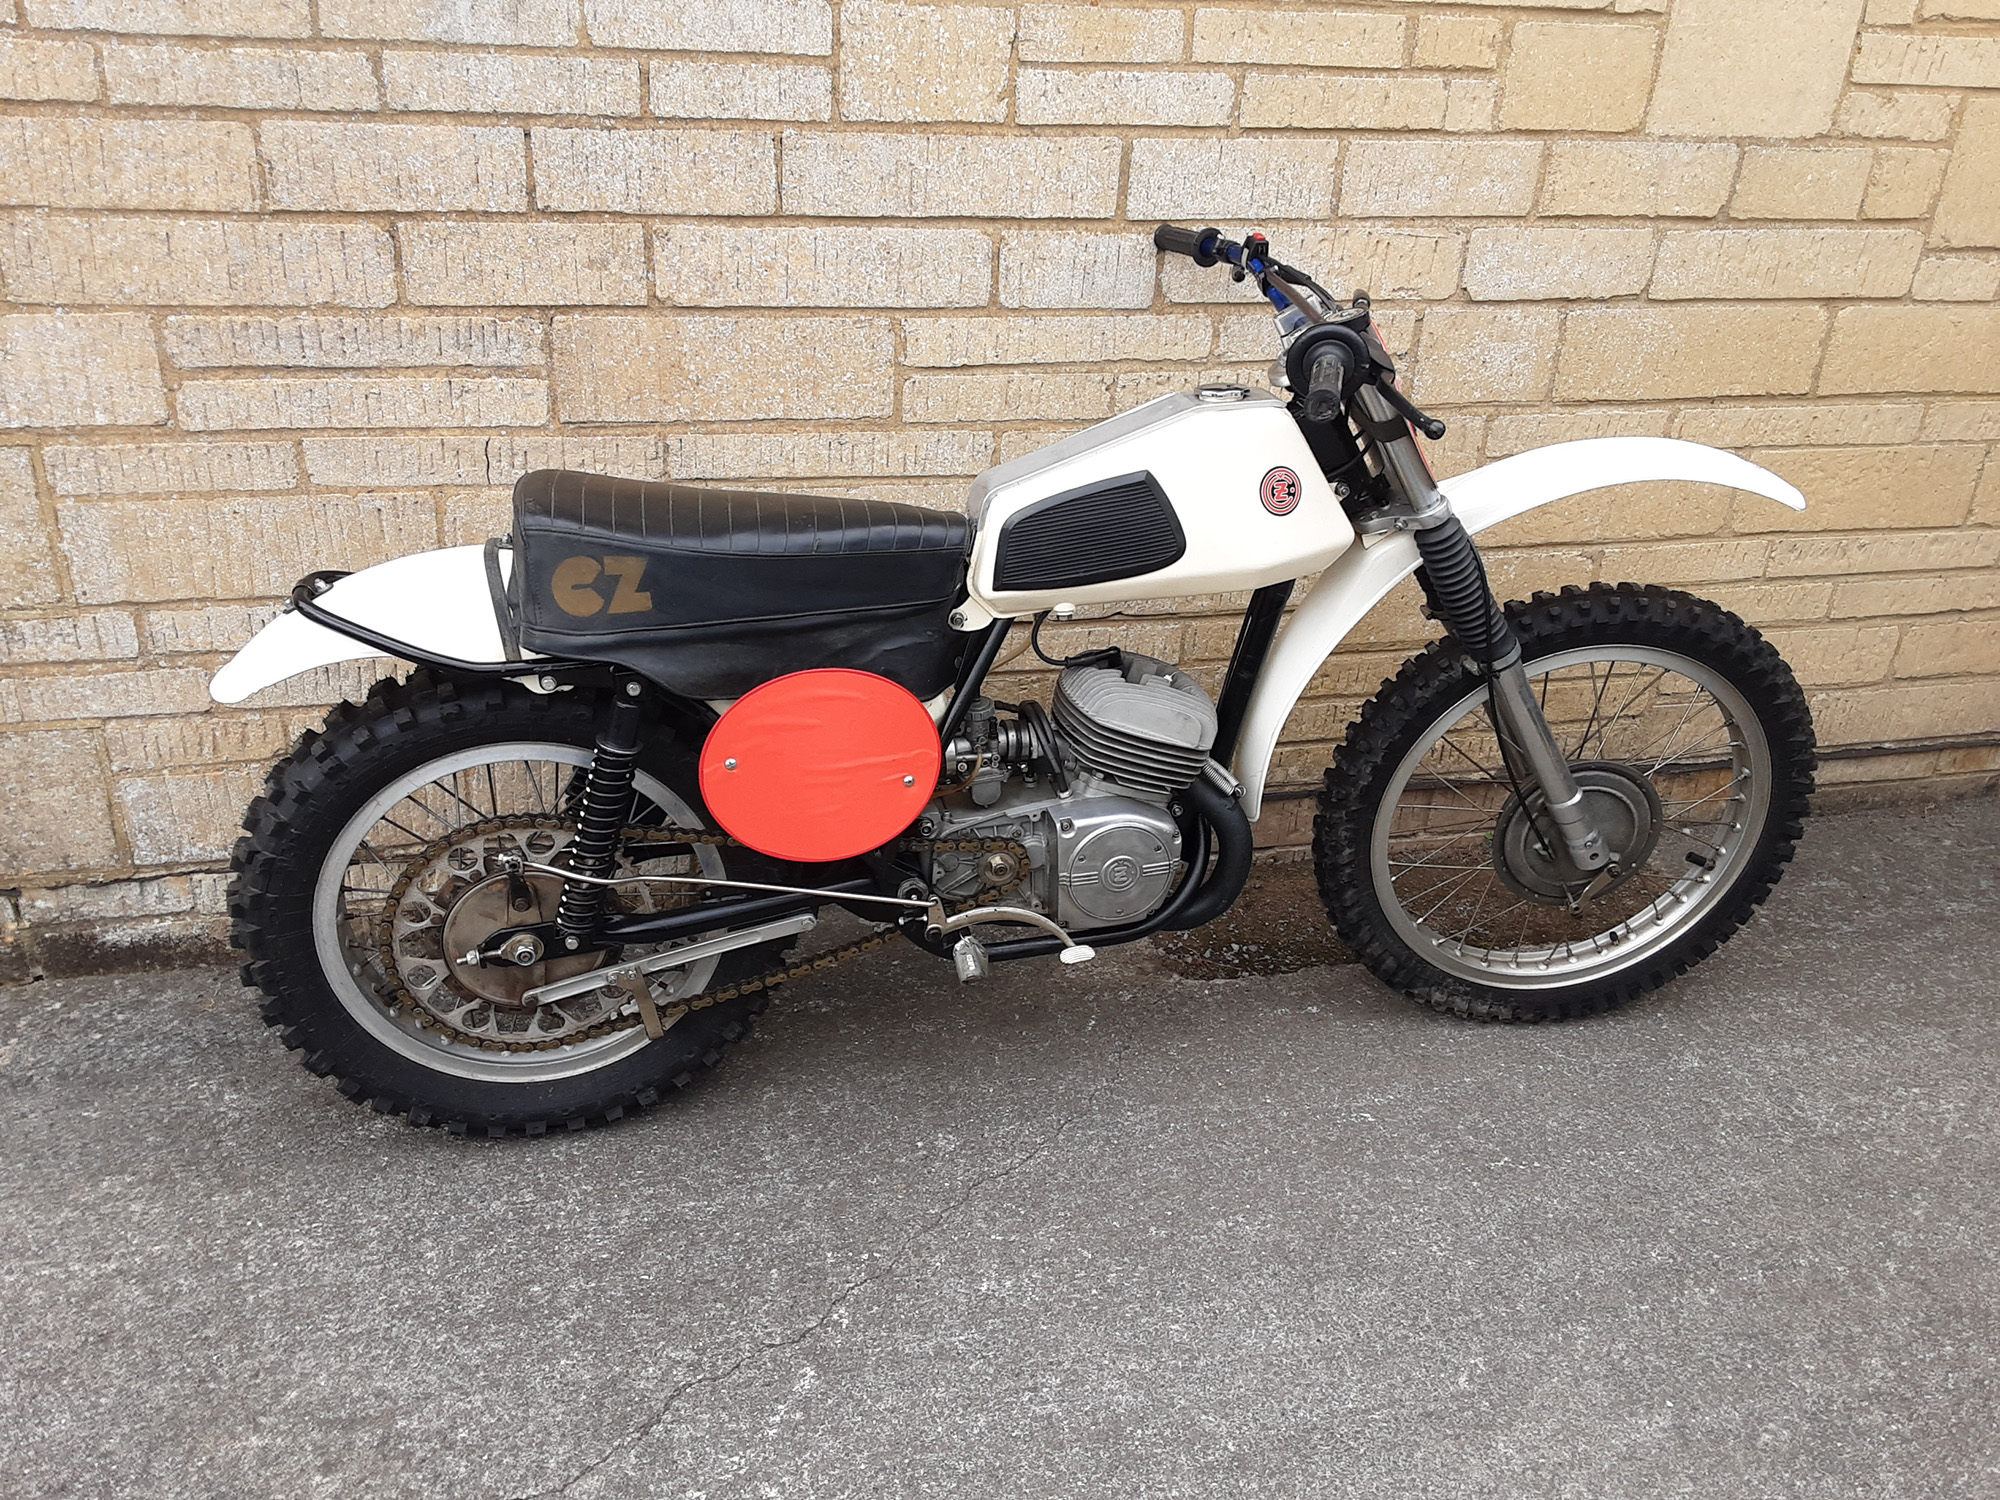 1973 CZ 125cc Moto Cross Bike Reg. no. Not road registered Engine no. 984 - 5 - 000299 - Image 2 of 2